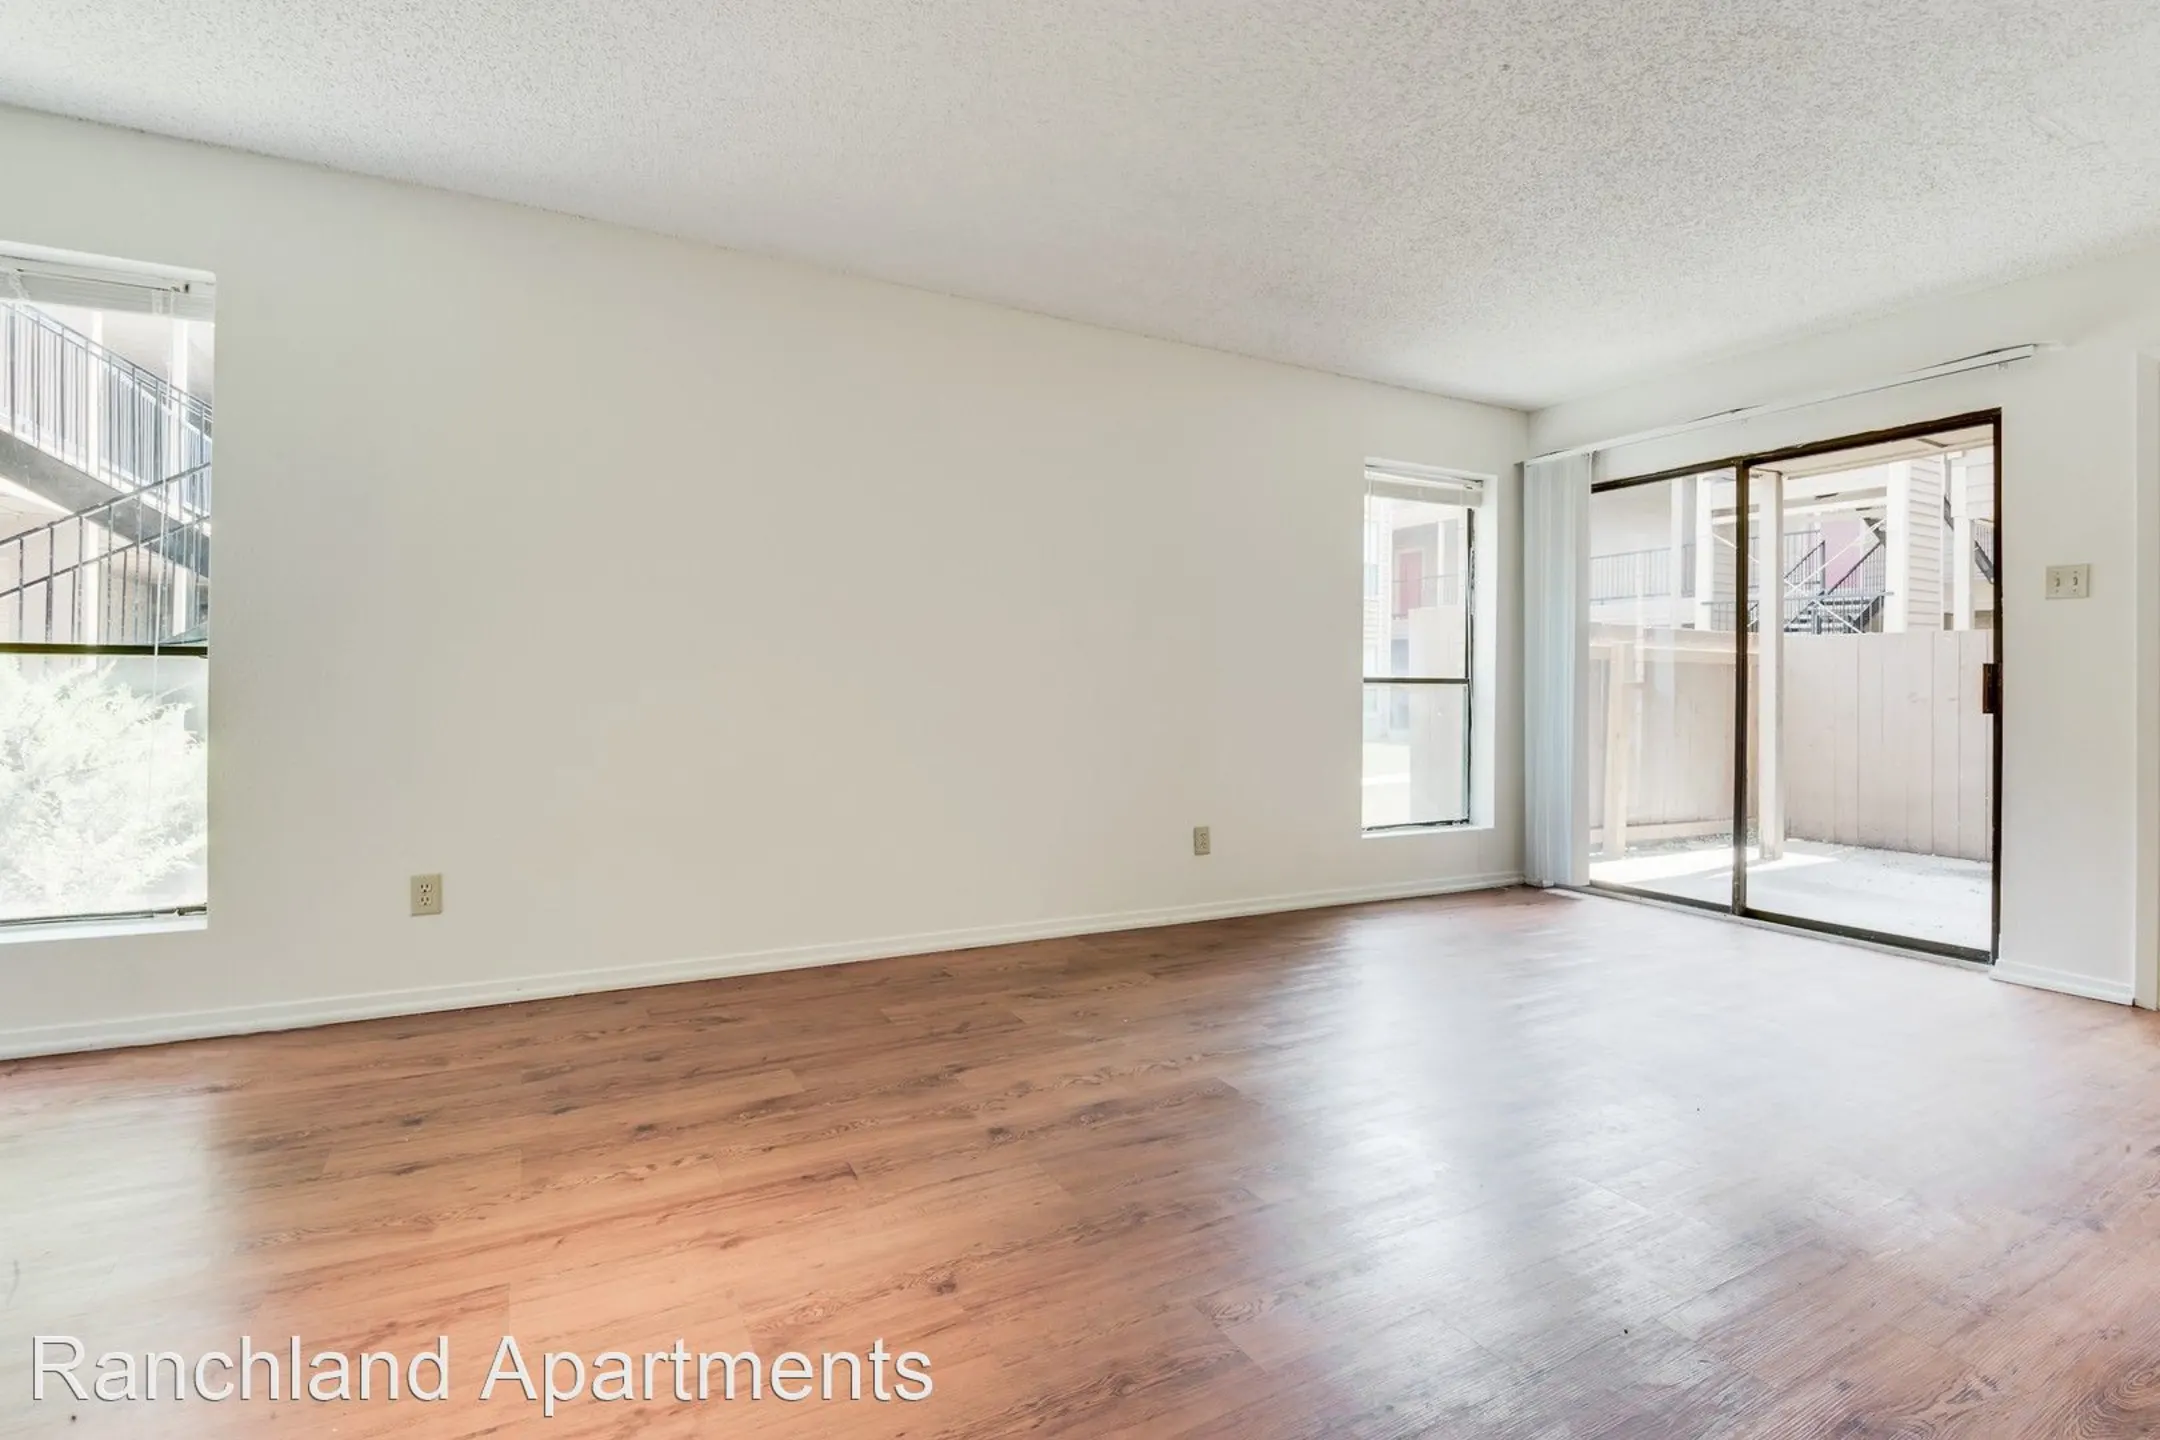 Living Room - Ranchland Apartments - Midland, TX